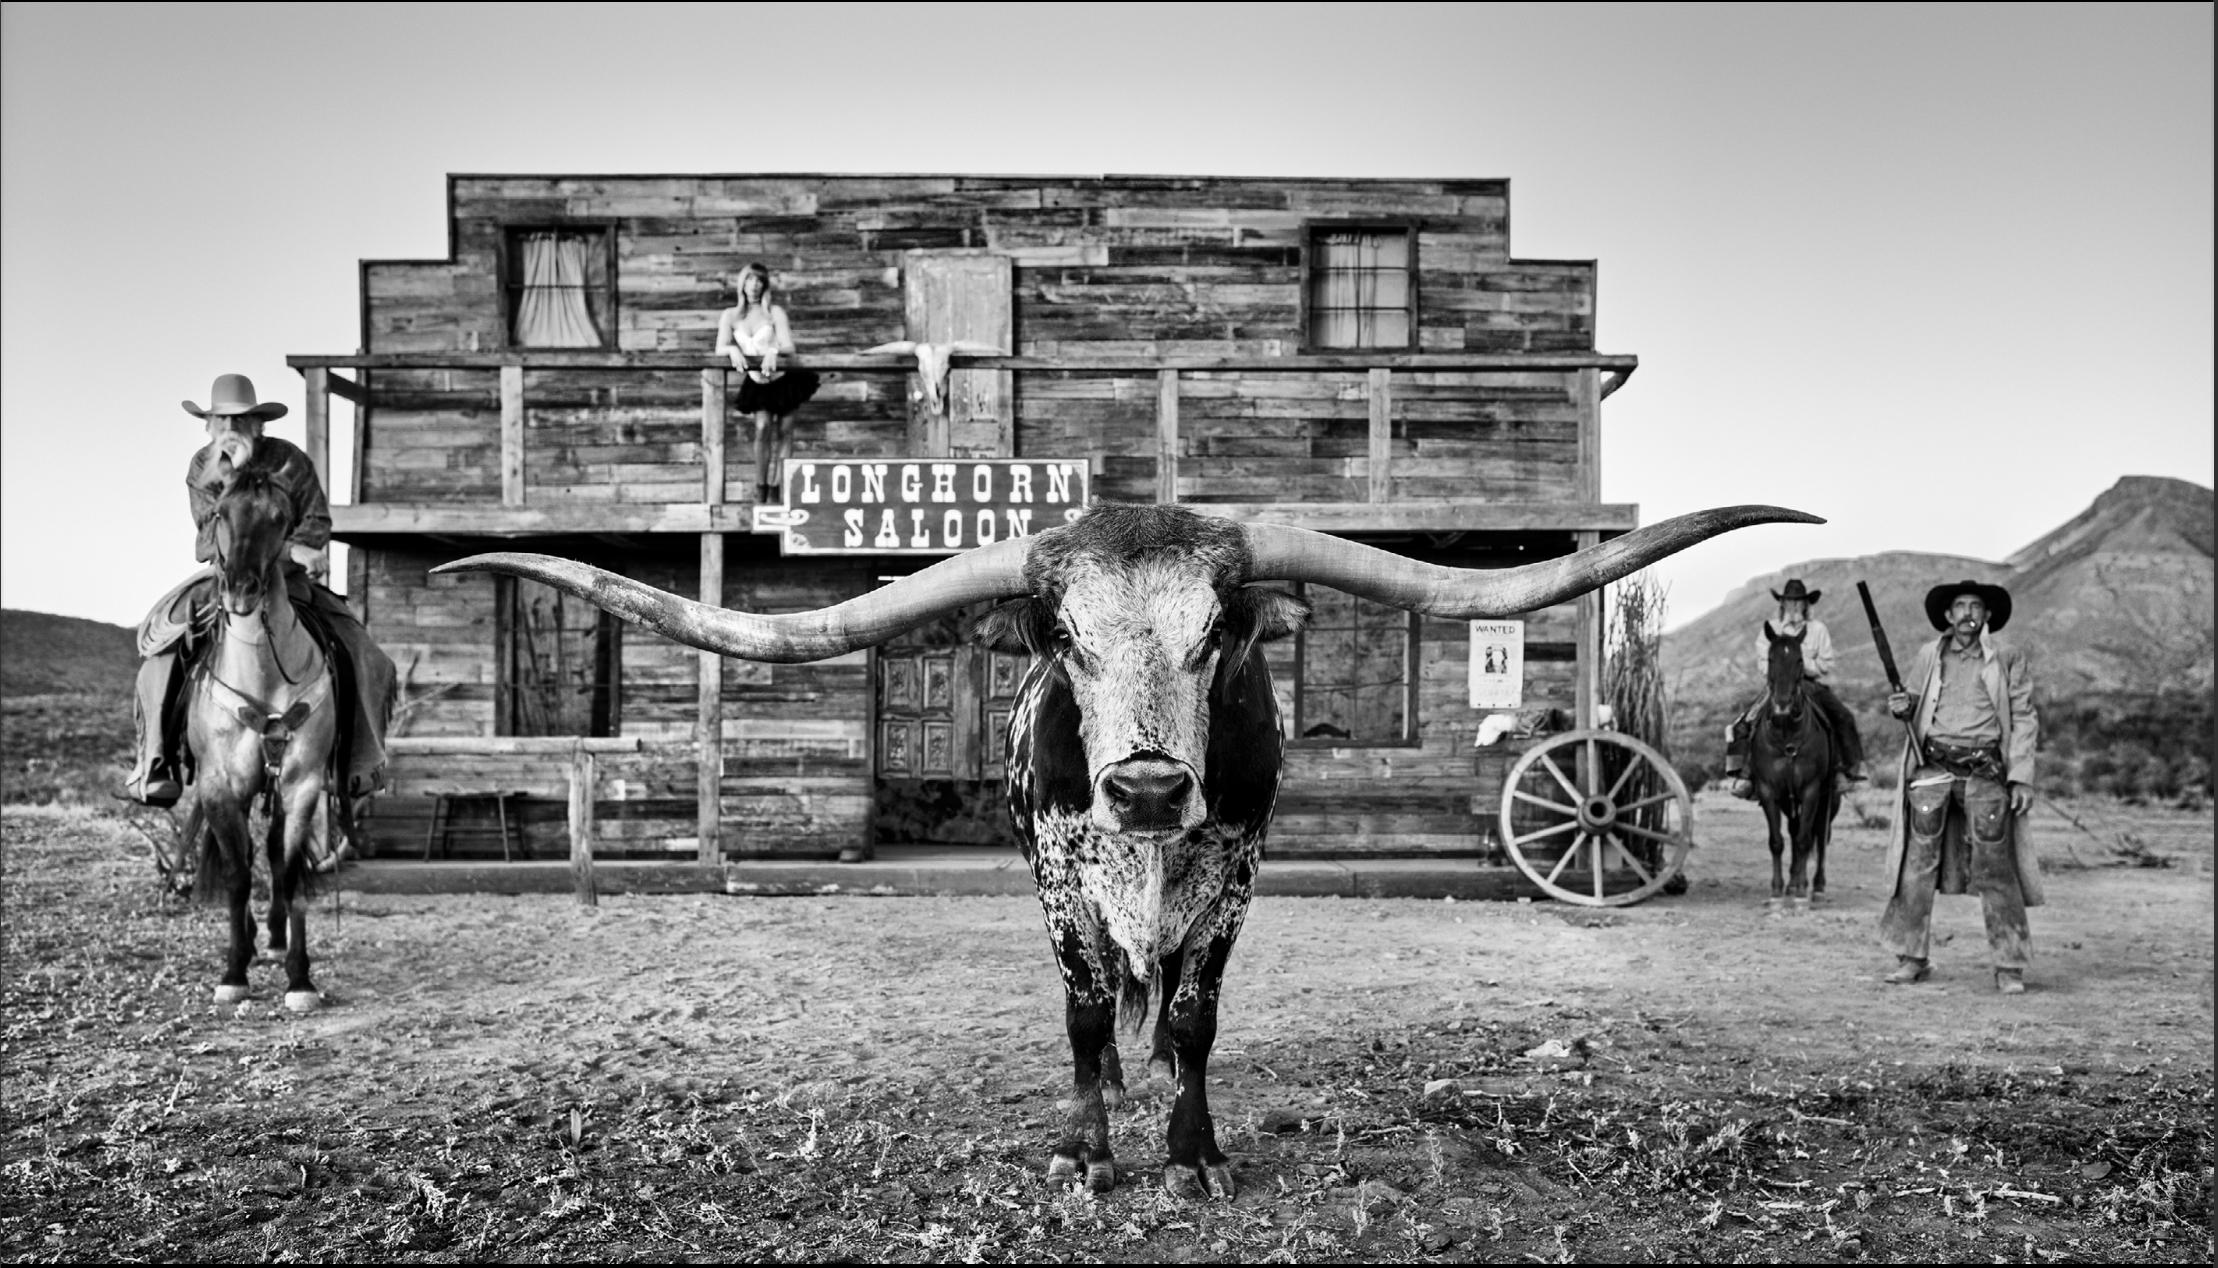 David Yarrow Portrait Photograph - The Longhorn Saloon